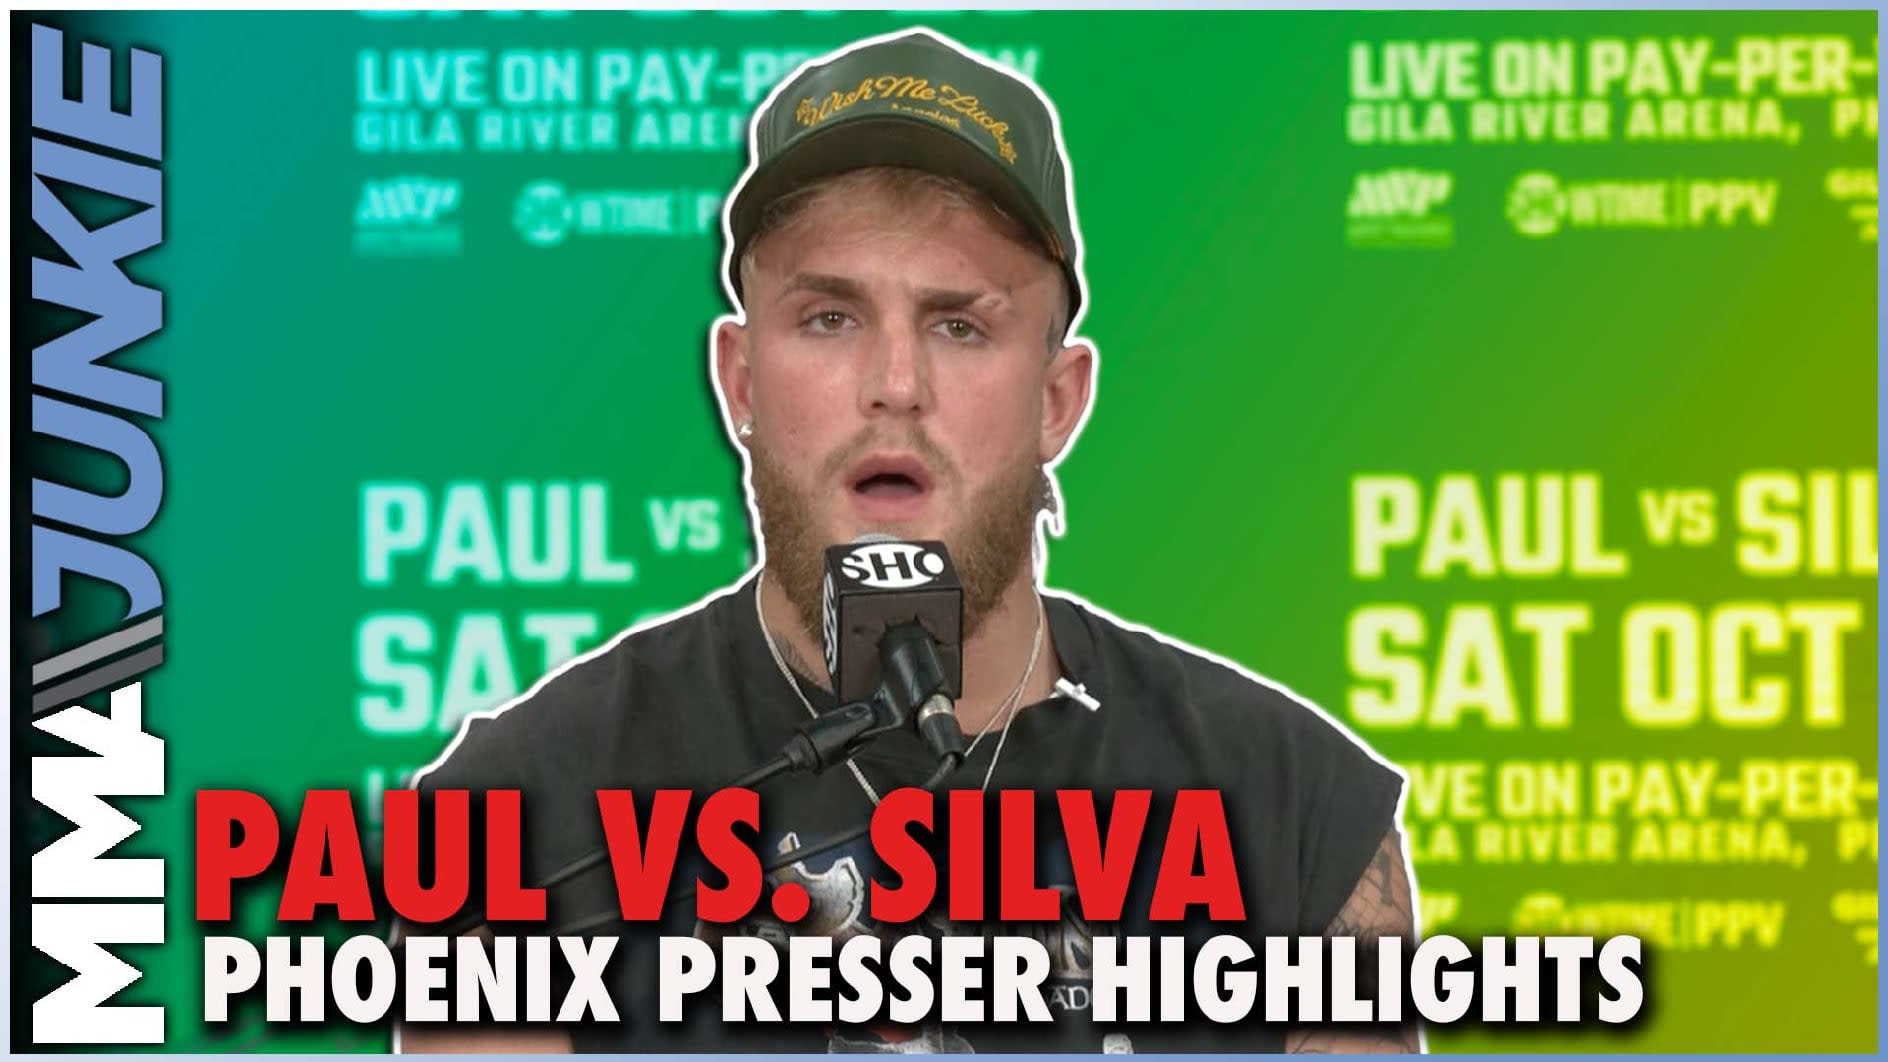 VIDEO Watch highlights of Jake Paul vs